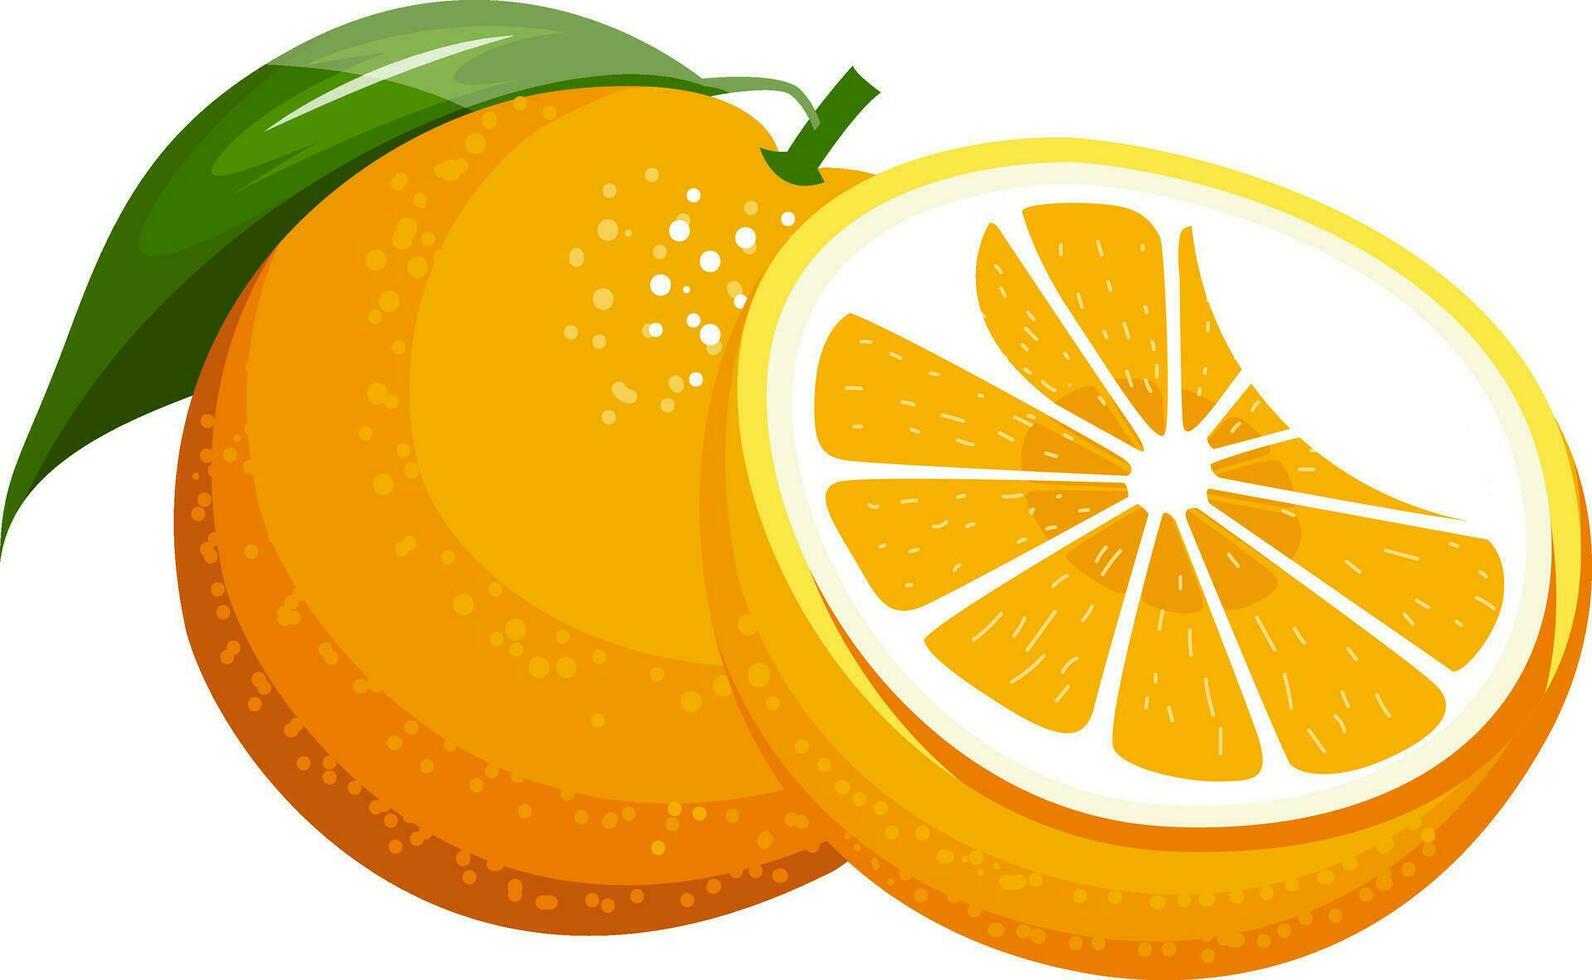 Cartoon orange with a green leaf orange and yellow half an orange vector illustration on white background.